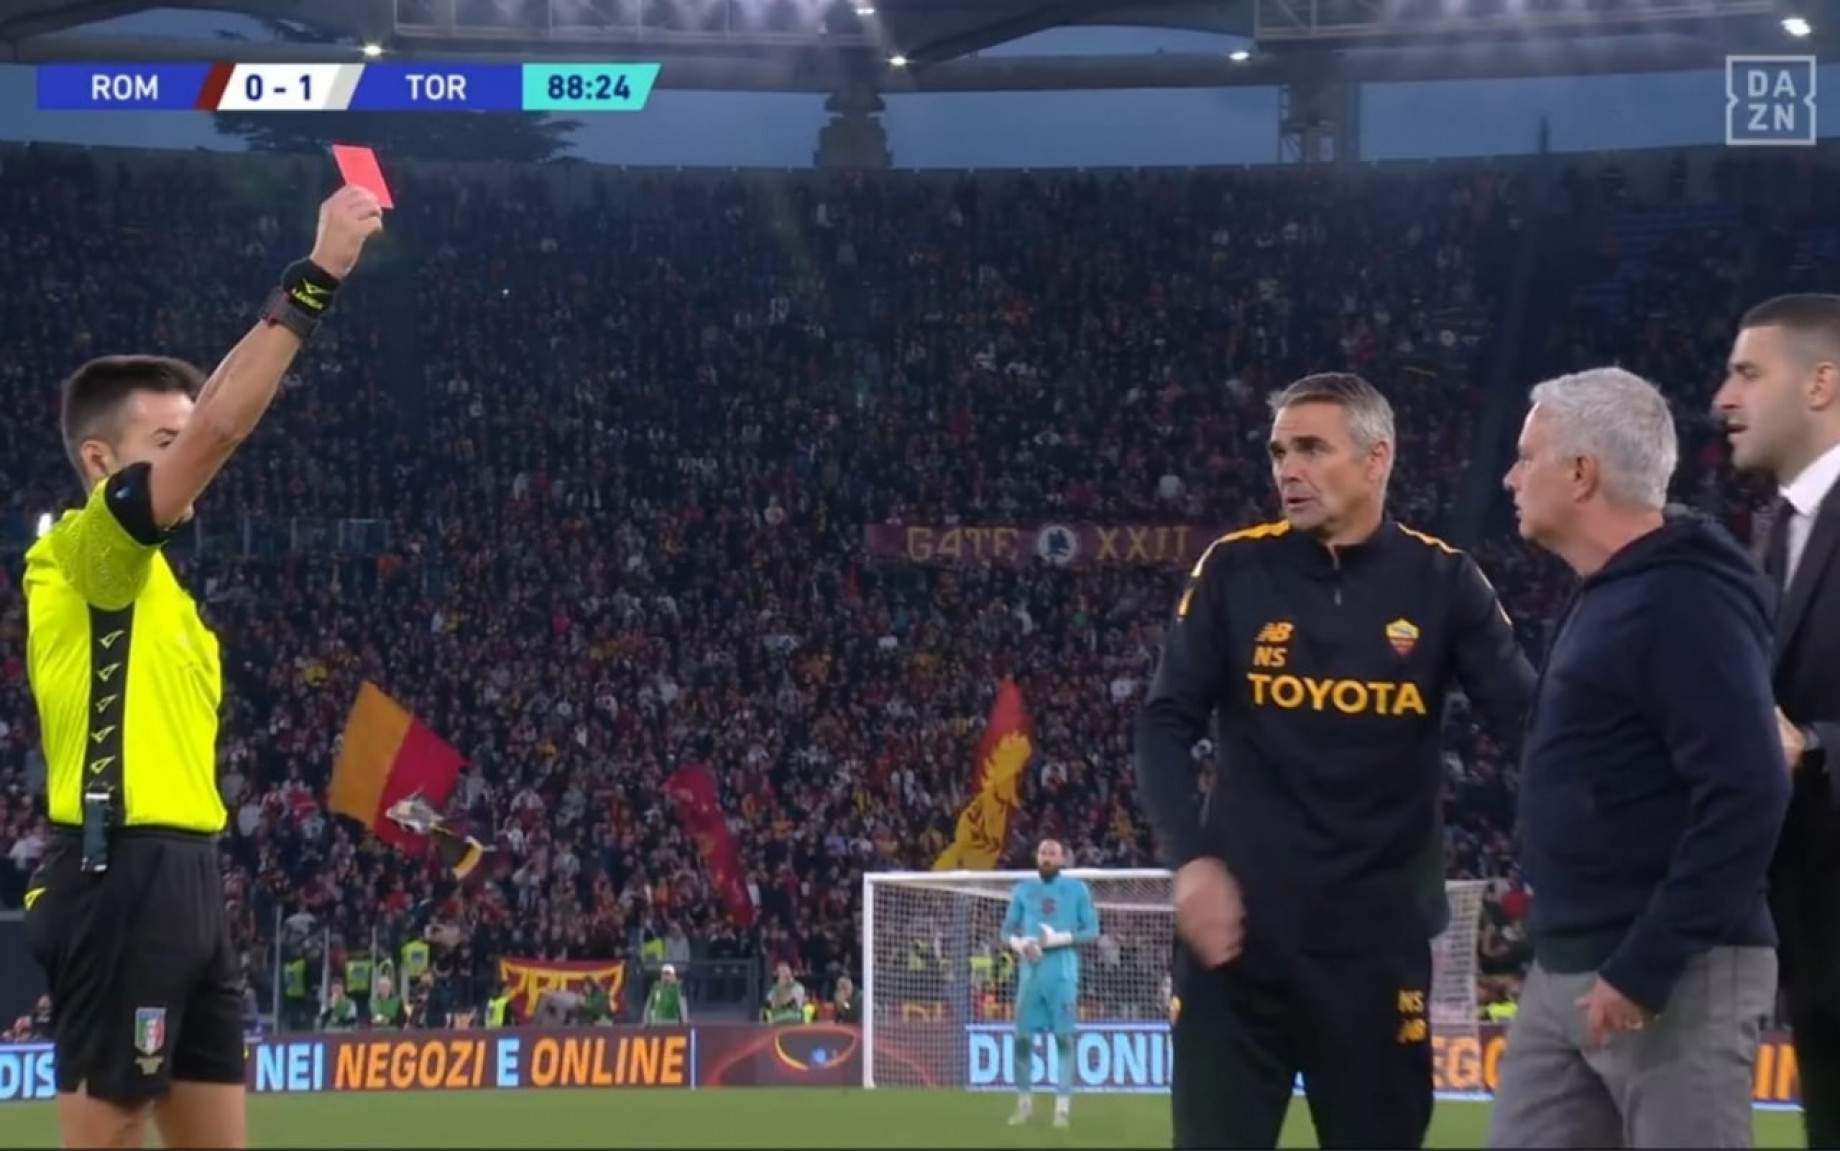 mourinho-roma-screen-1280x801-min.jpg